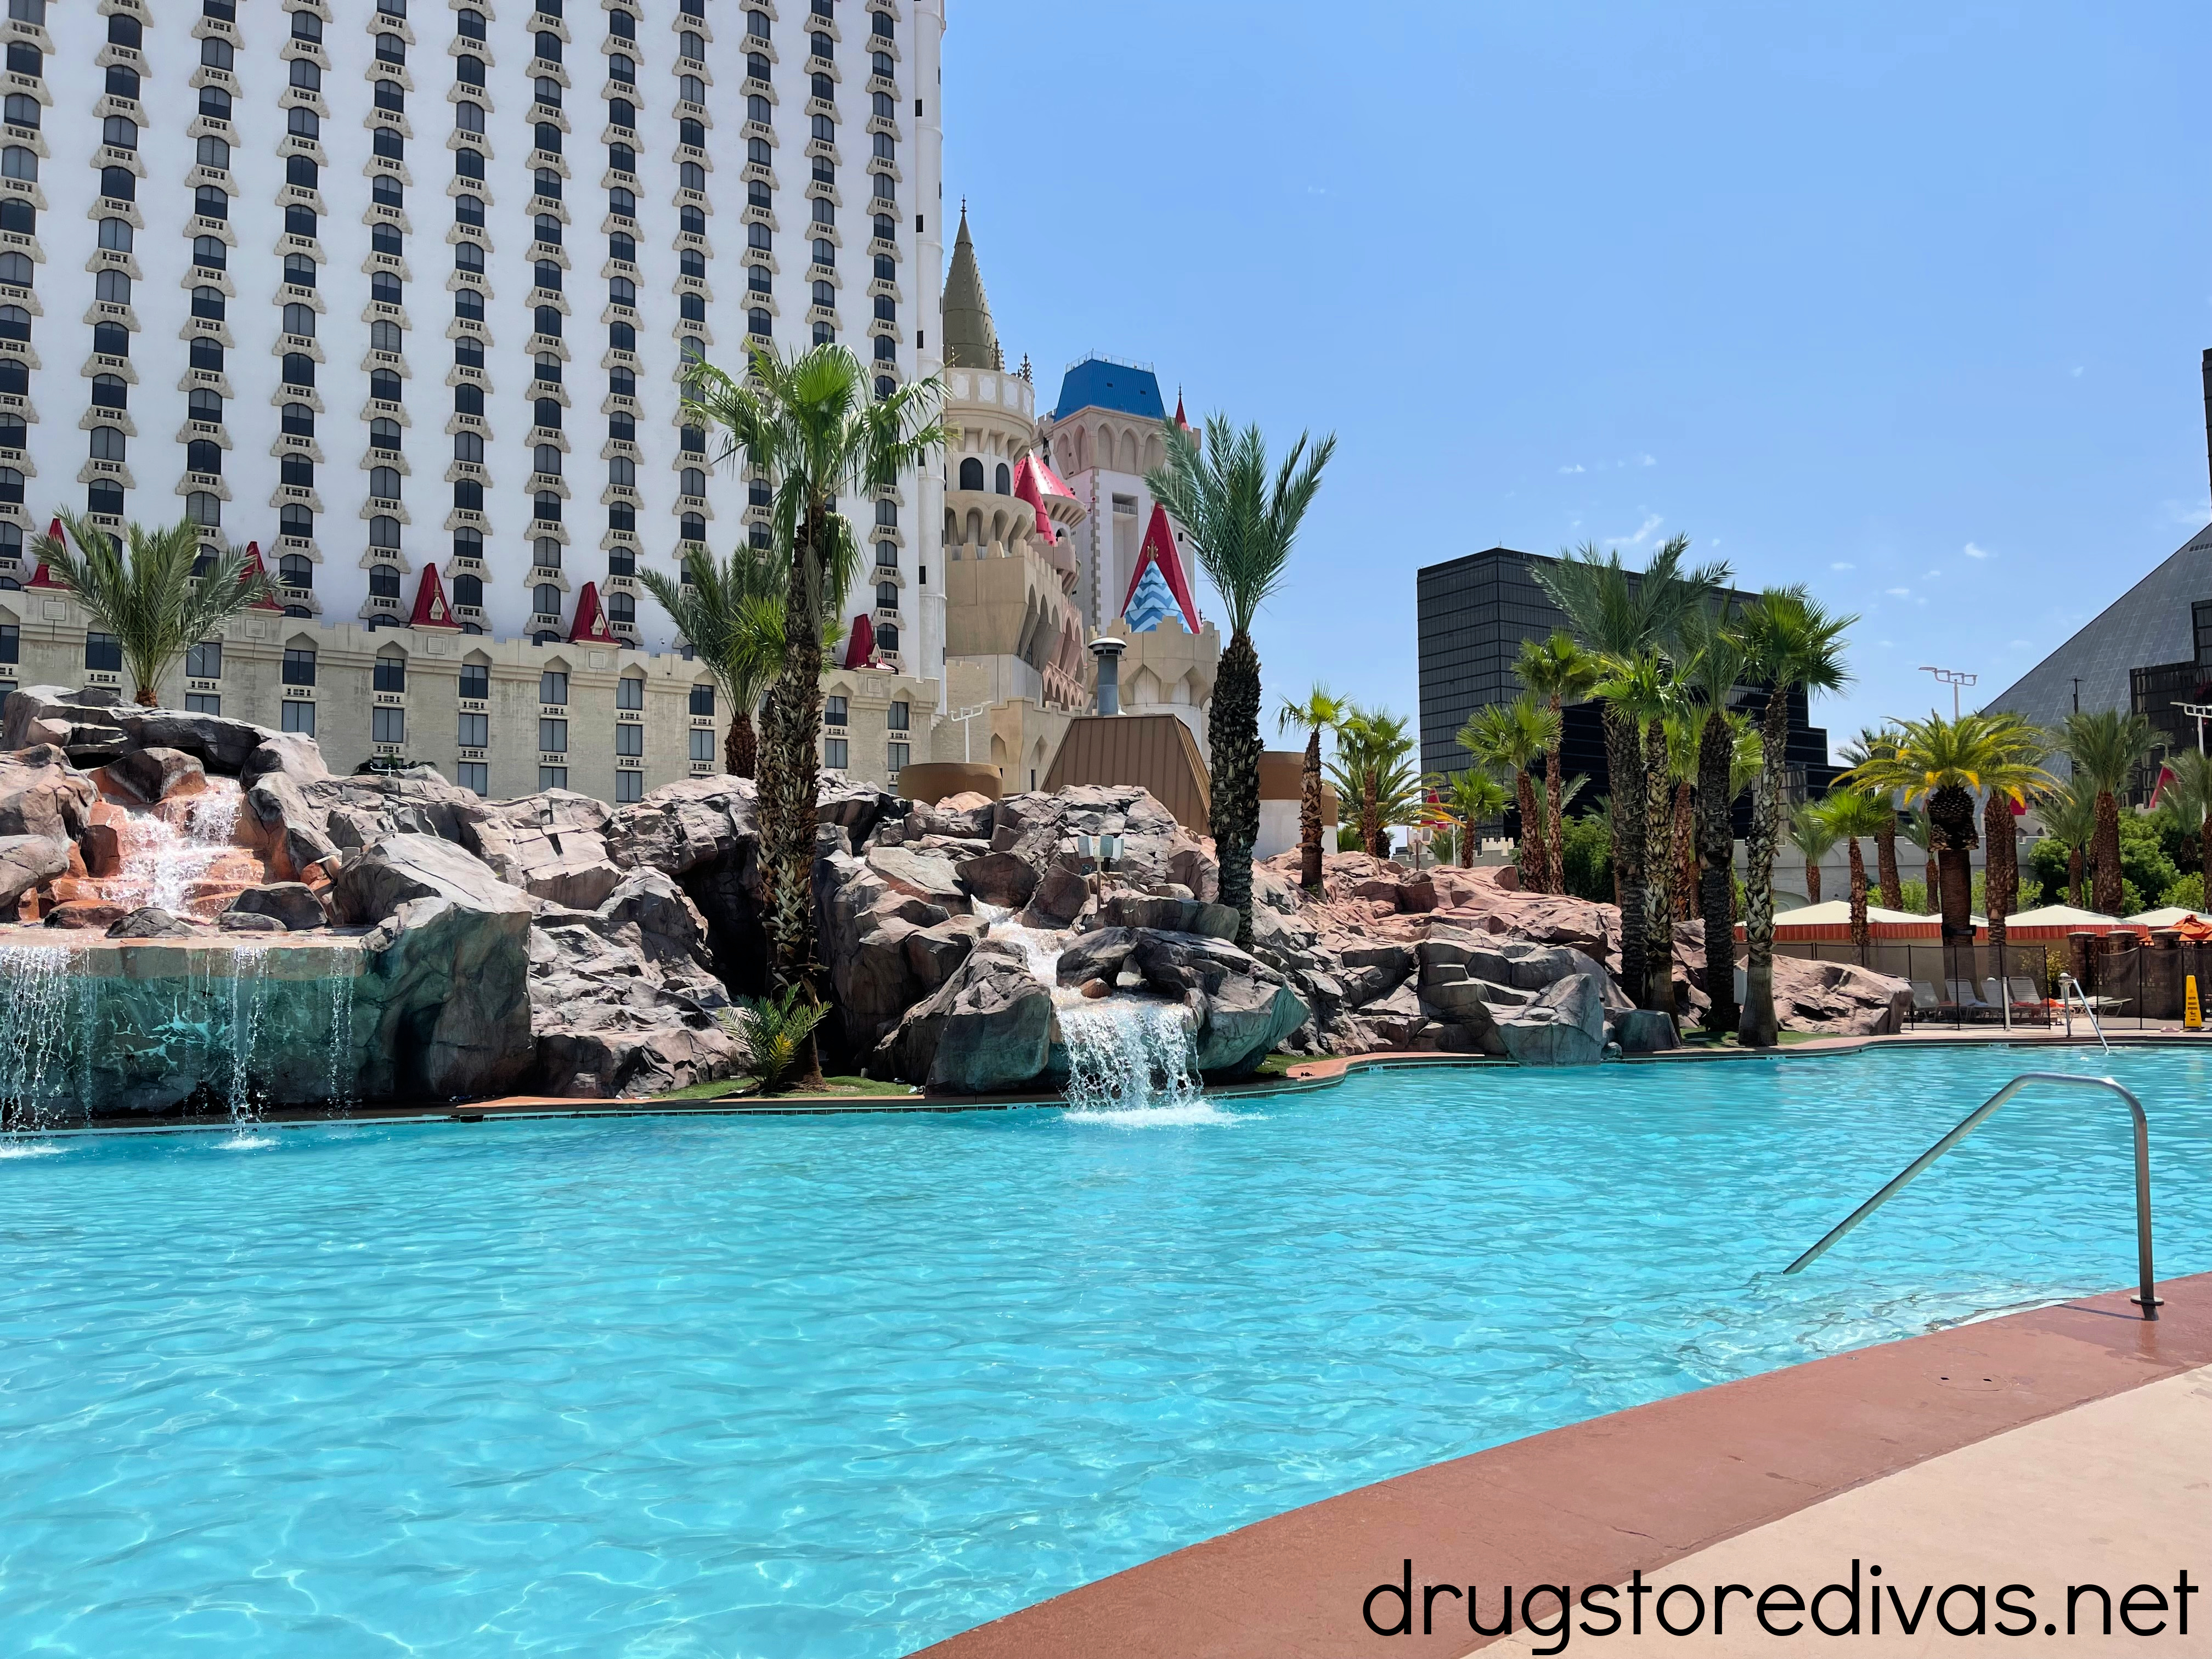 The pool at the Excalibur Hotel & Casino in Las Vegas.